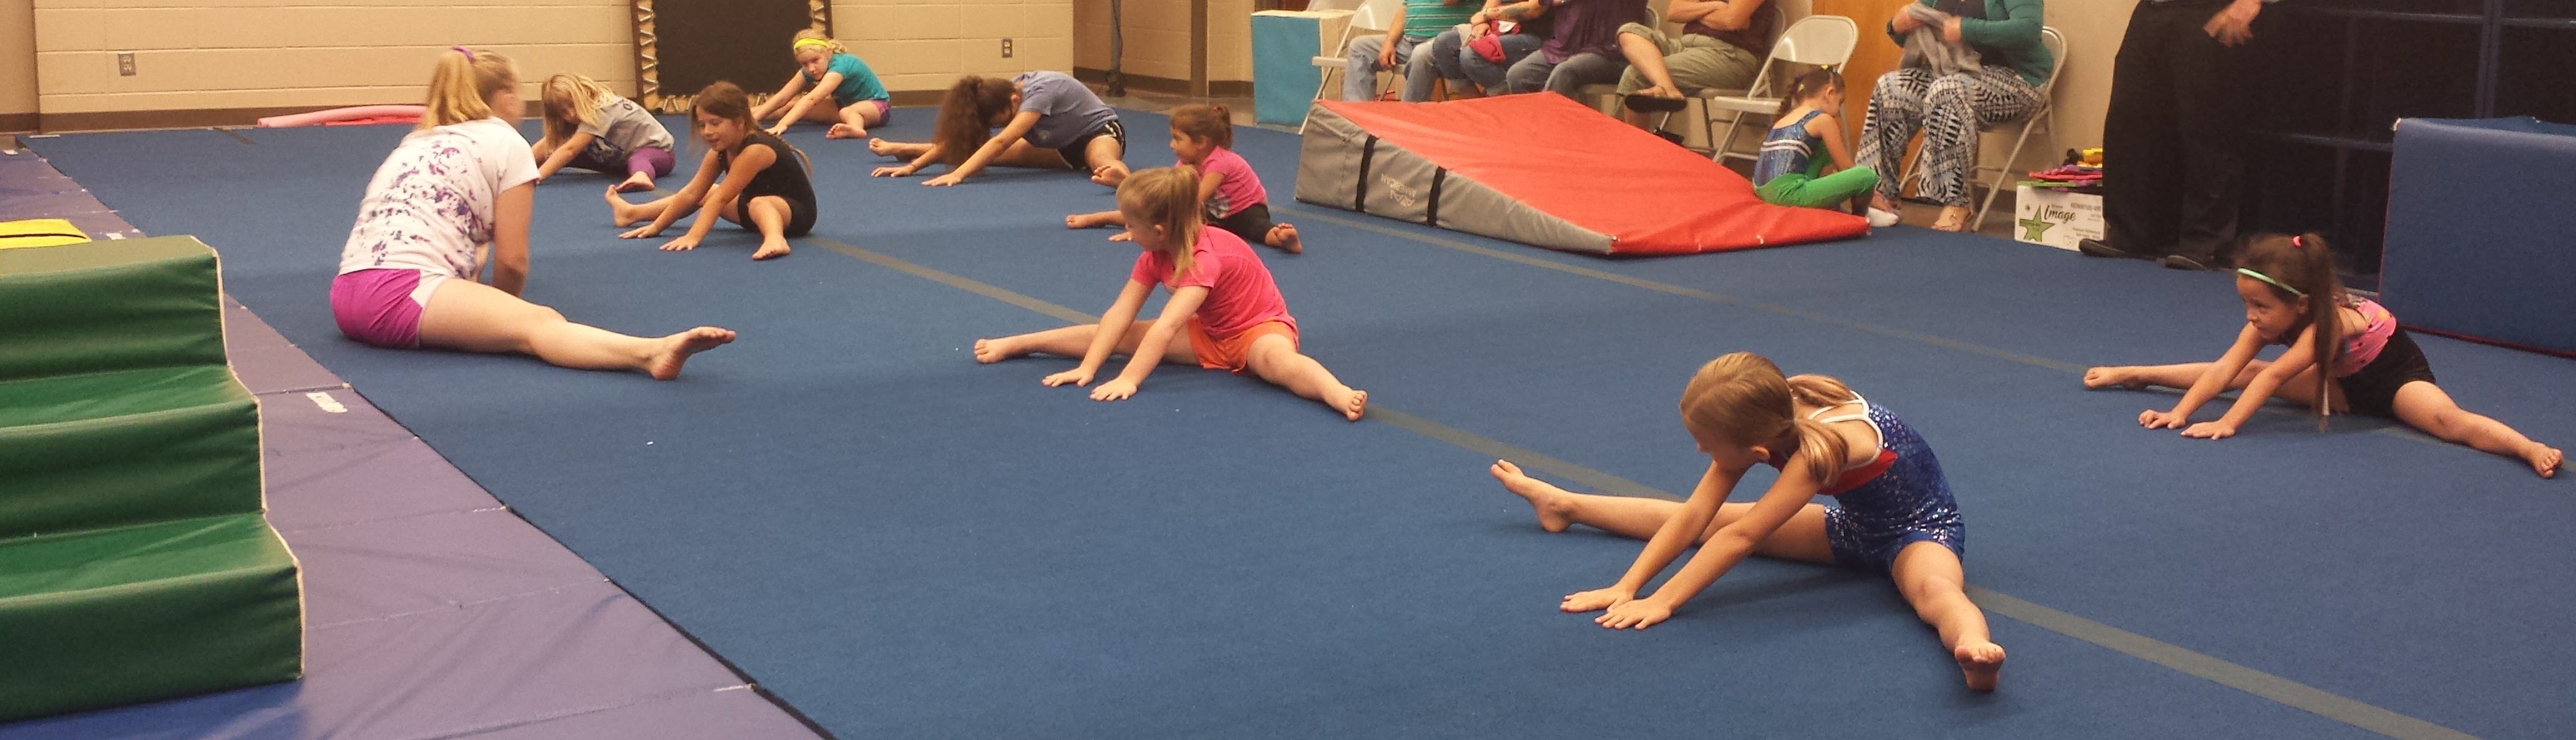 Fall Gymnastics Session